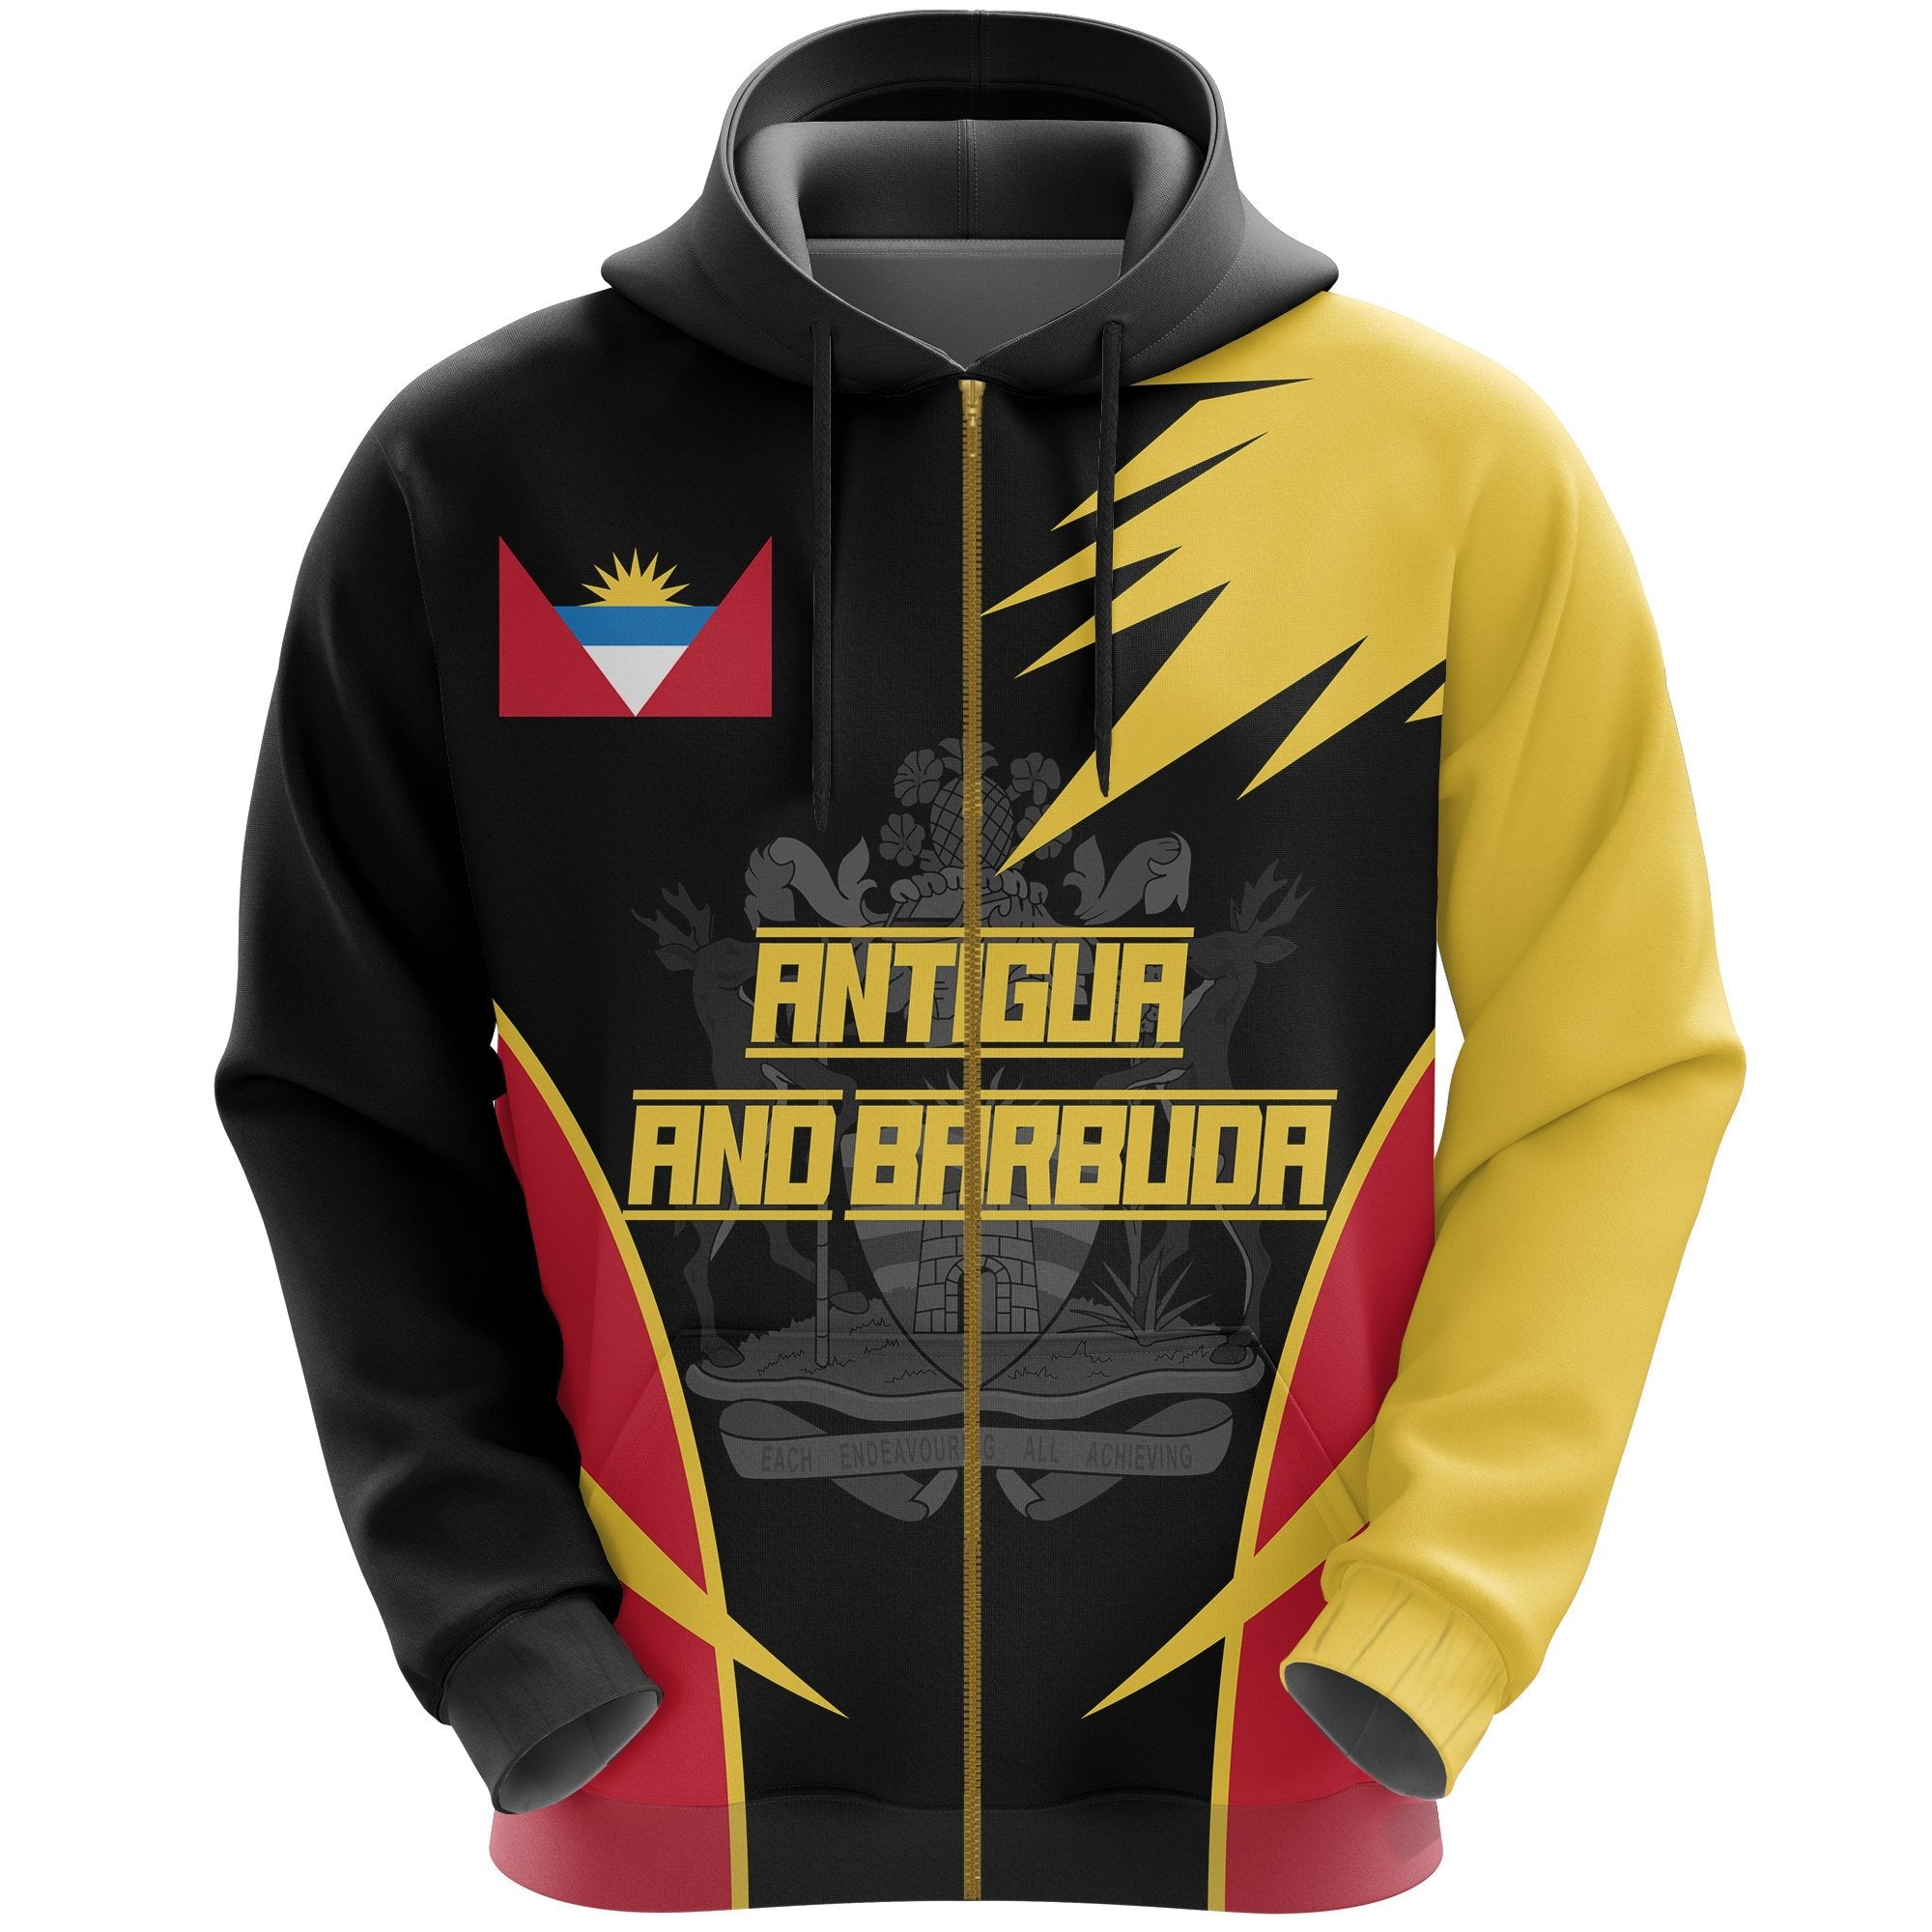 antigua-and-barbuda-active-zipper-hoodie